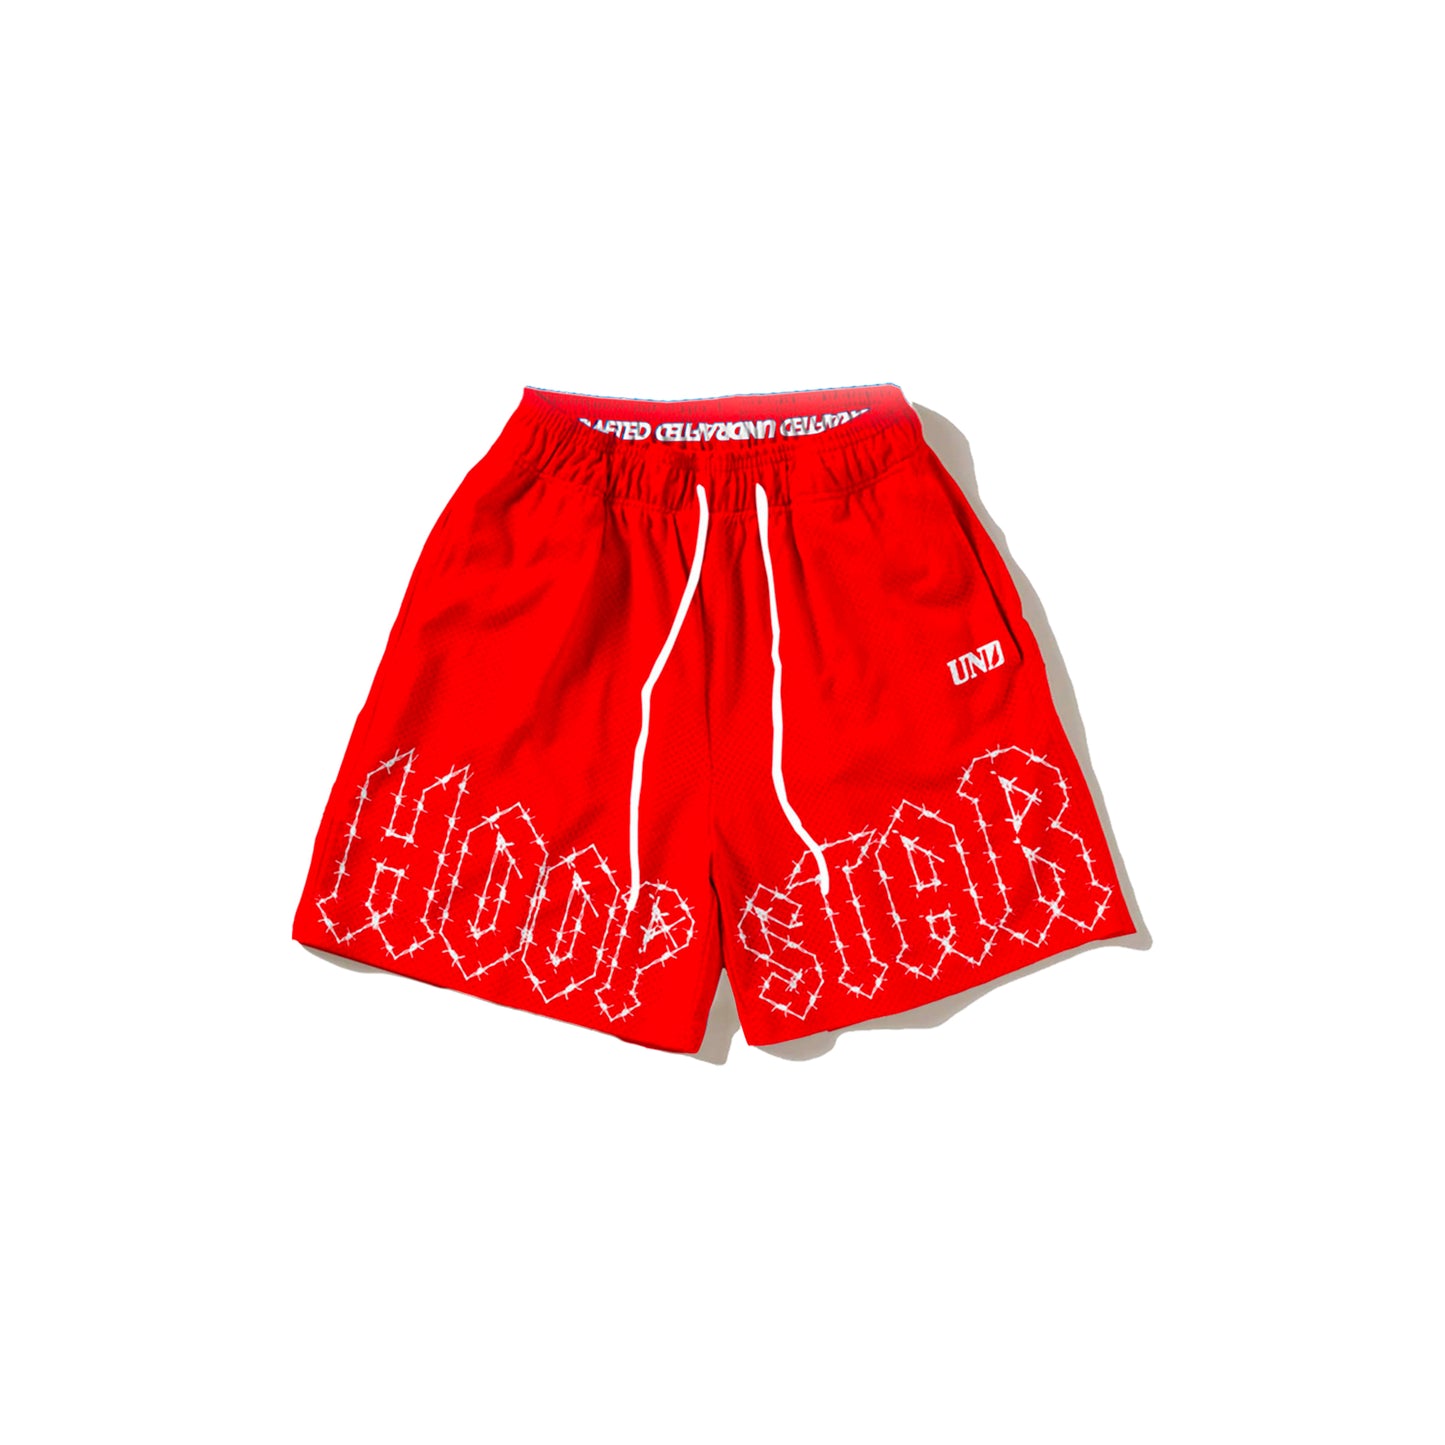 Hoop Star Red Mesh Shorts